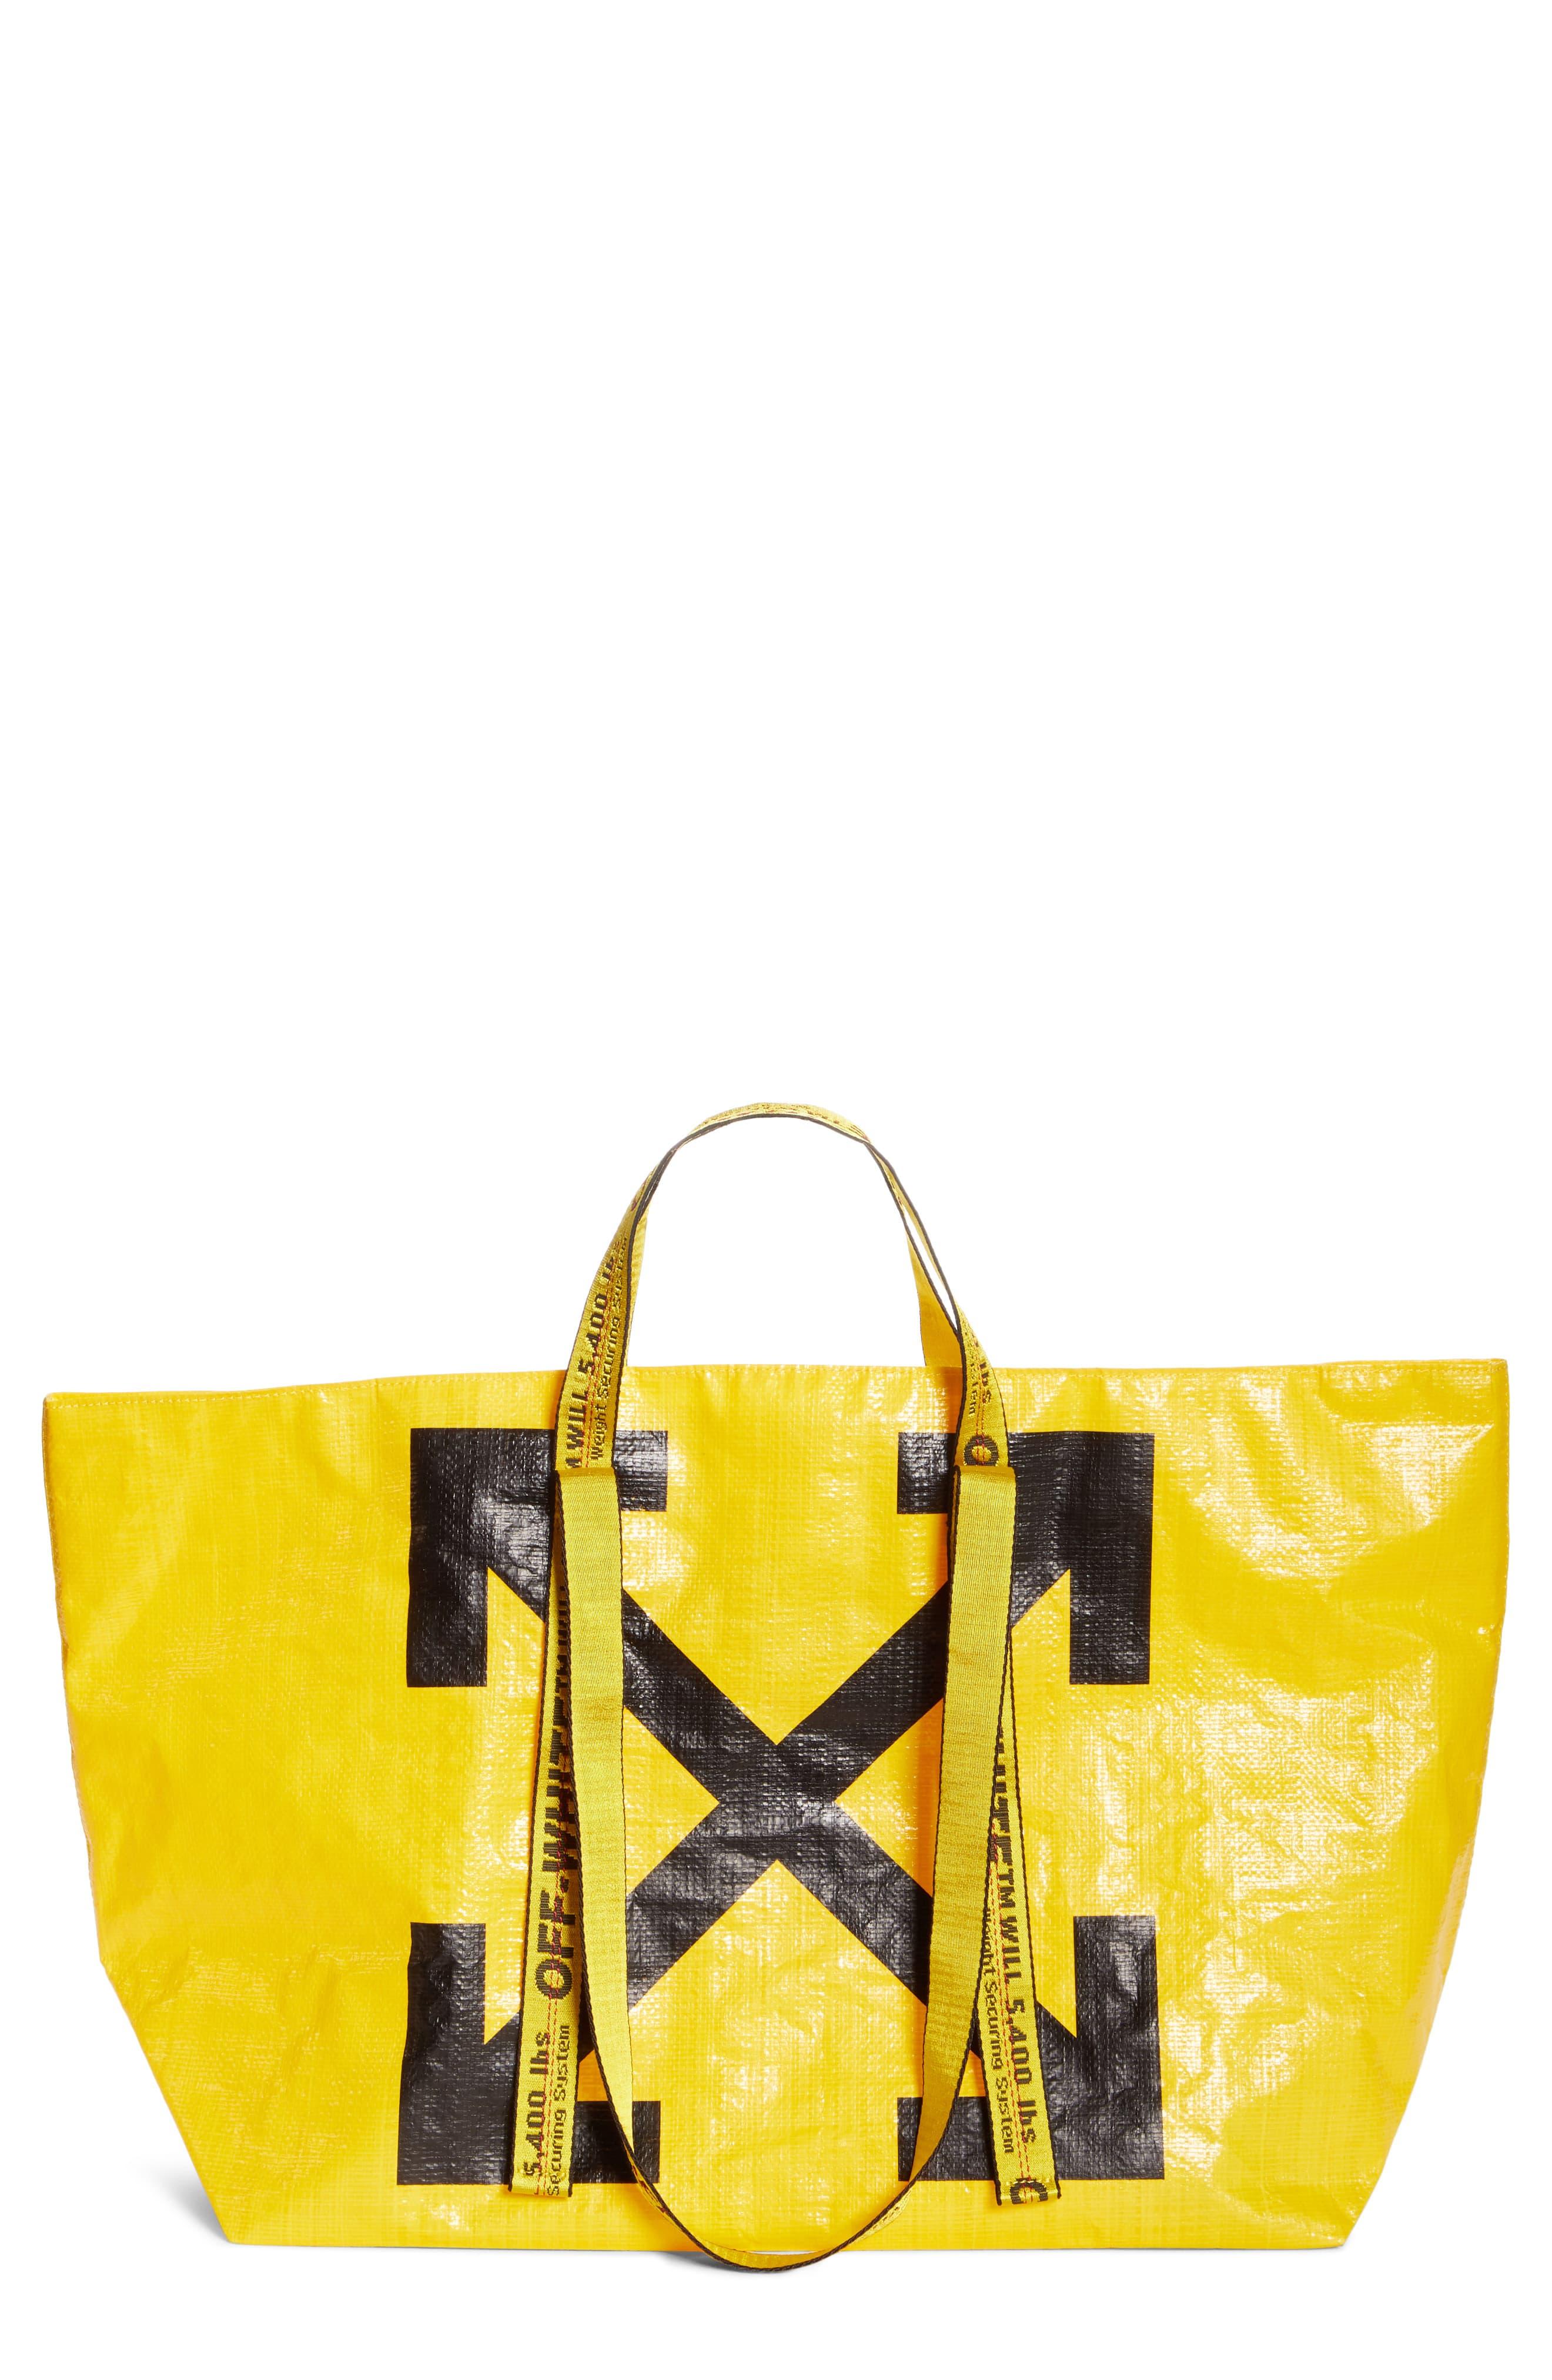 Virgil Abloh Canary Yellow x FOS Tote Bag Black - Novelship